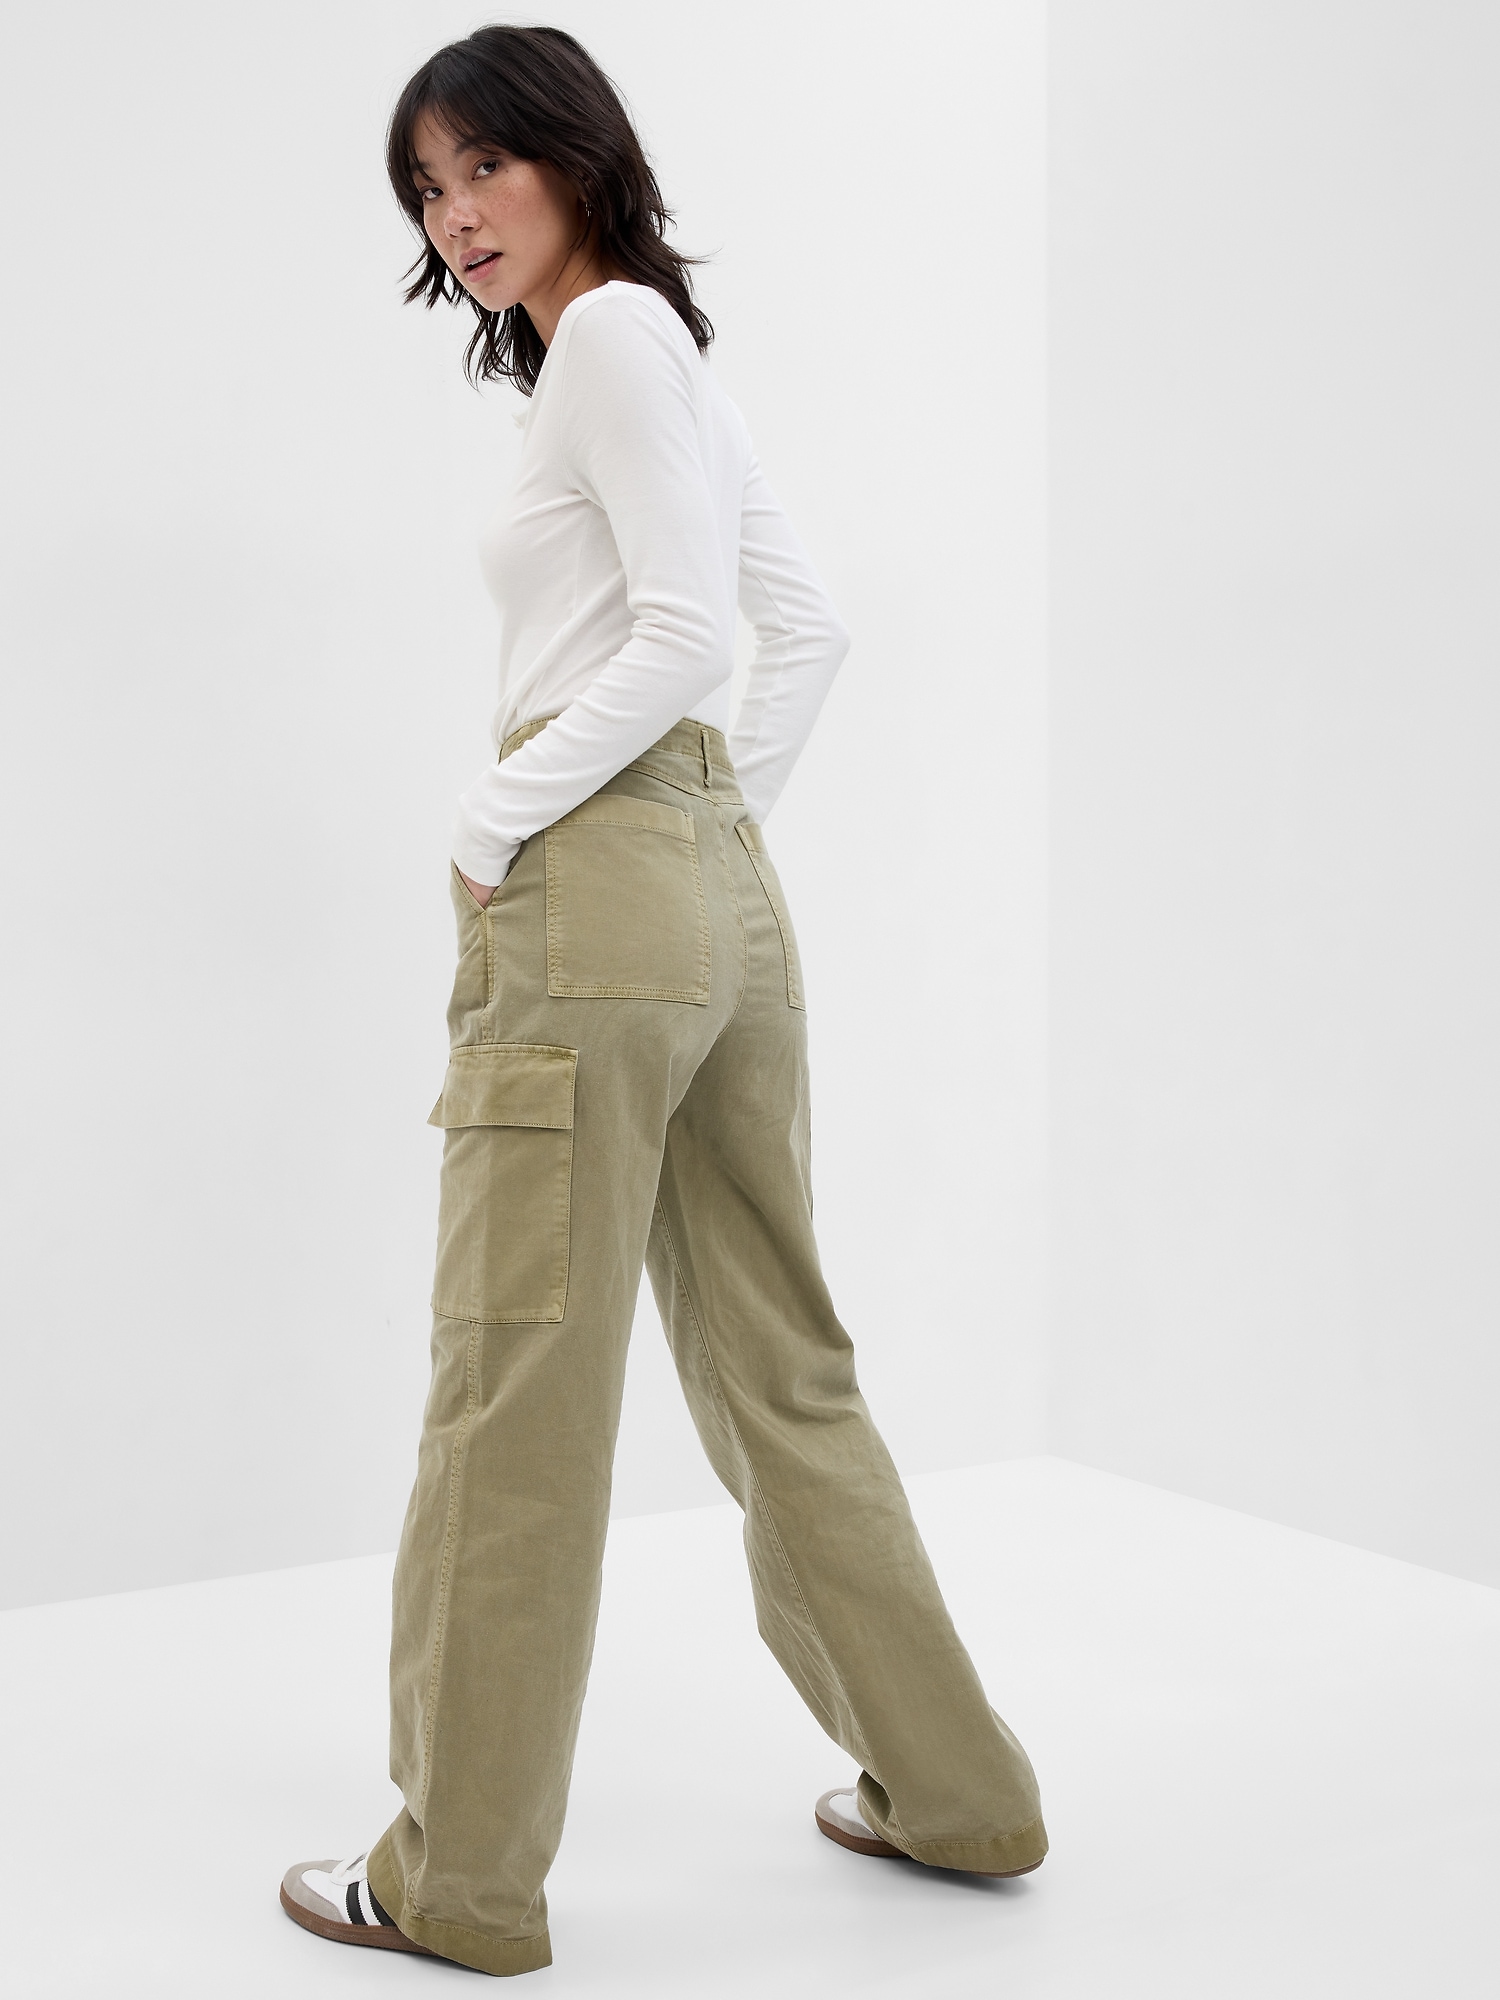 Buy Khaki Trousers  Pants for Men by iVOC Online  Ajiocom